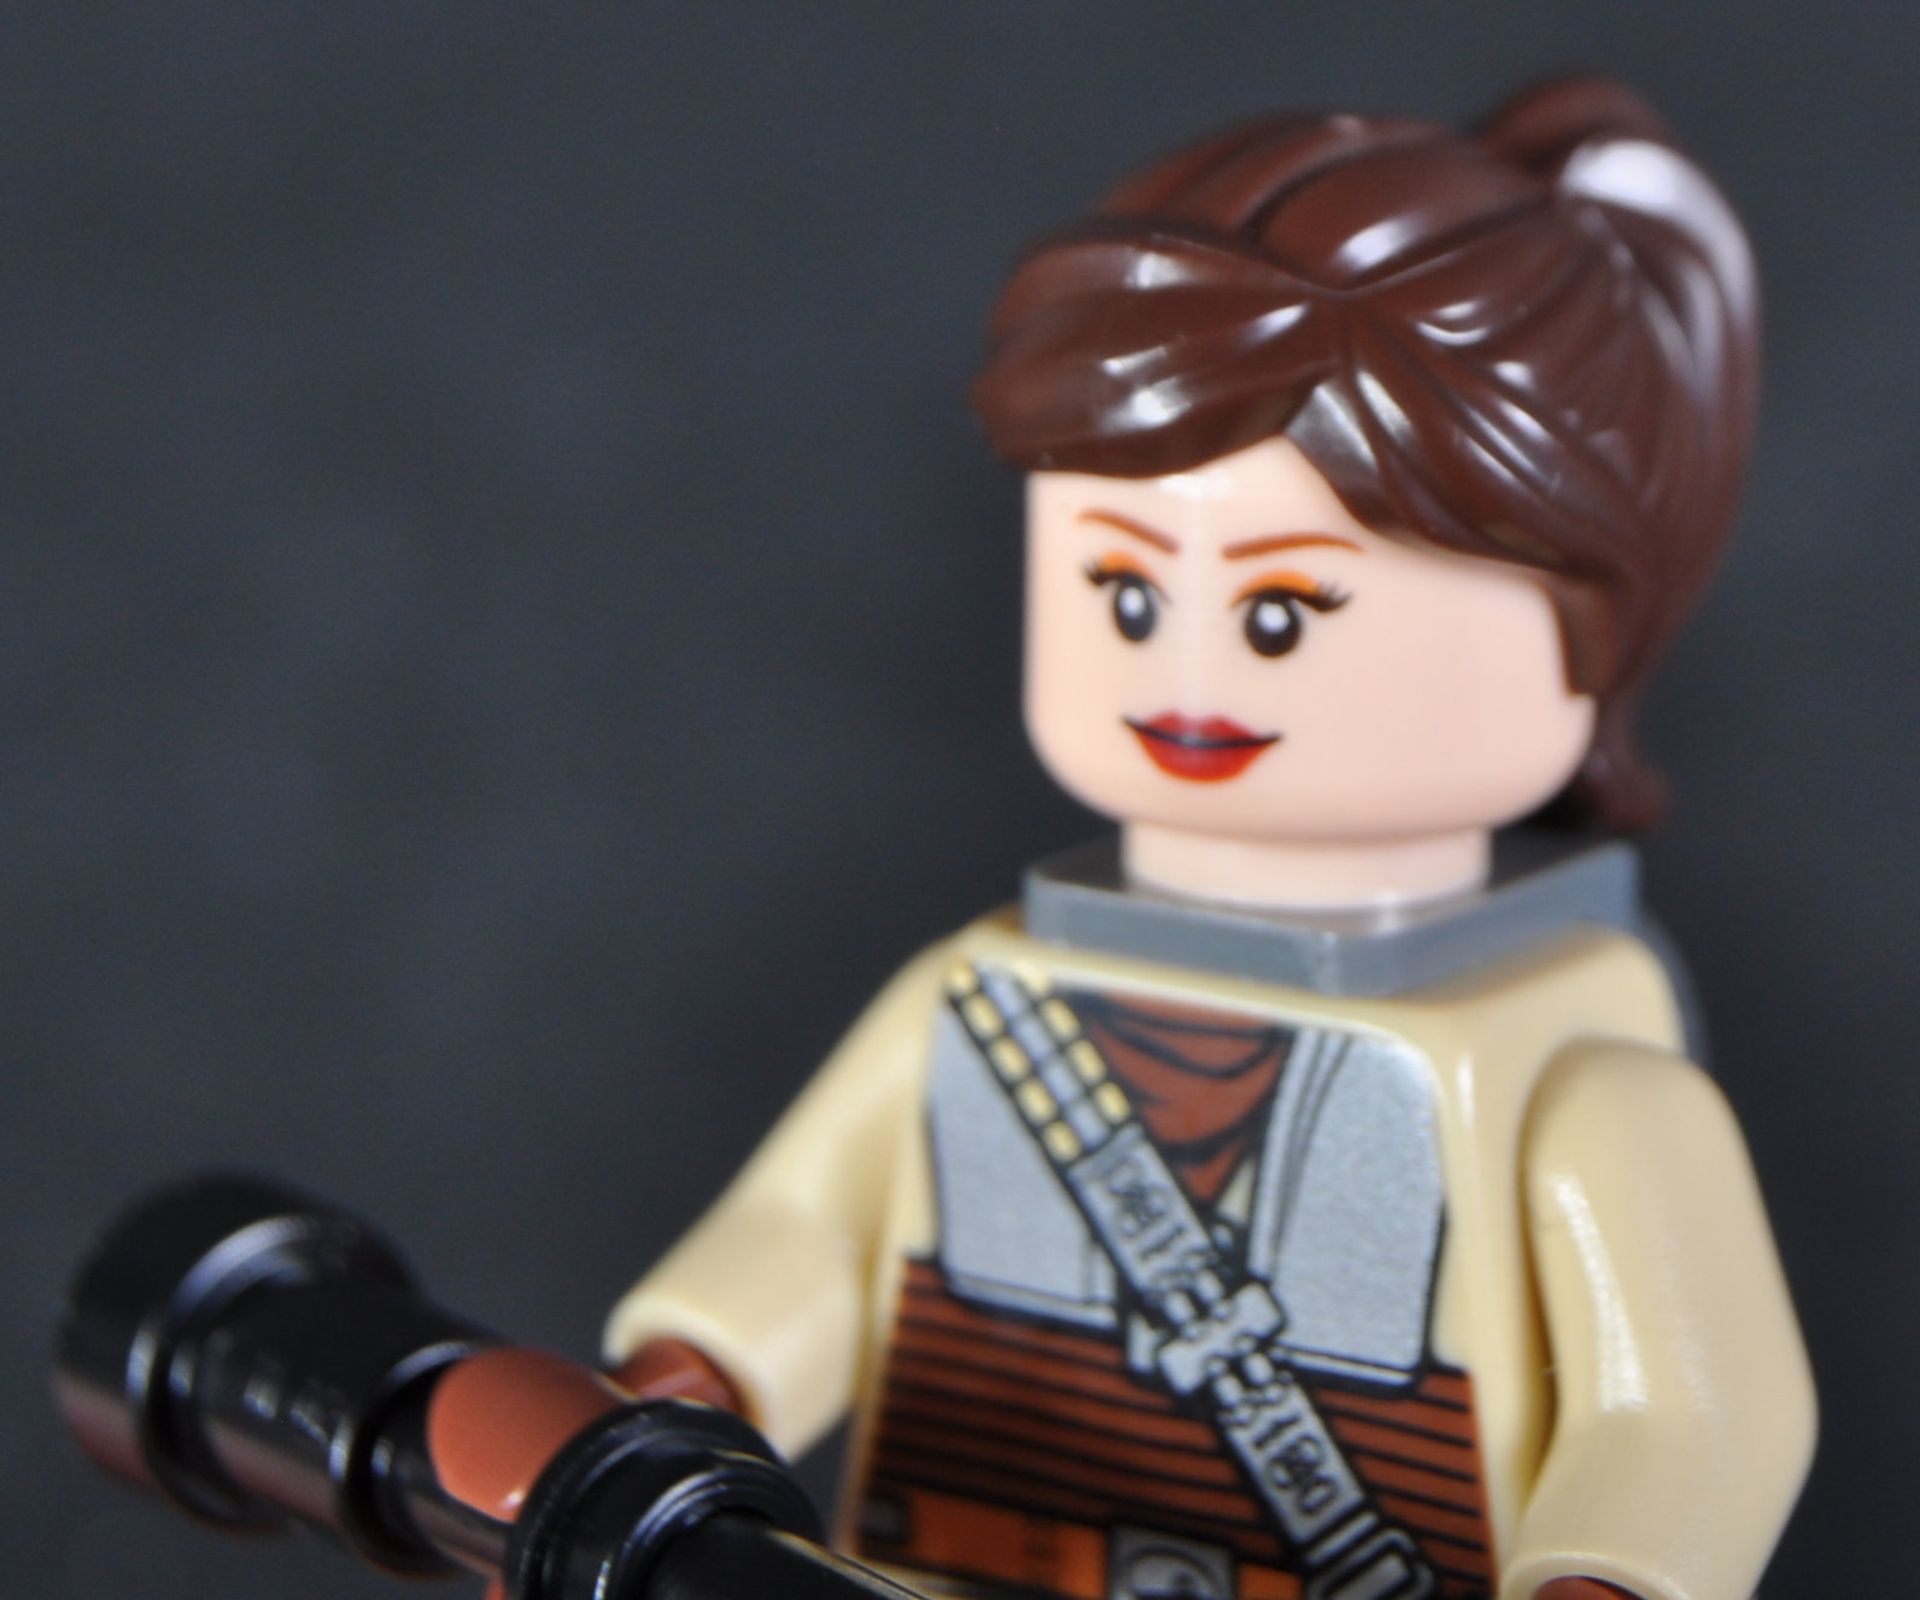 LEGO MINIFIGURE - STAR WARS - PRINCESS LEIA BOUSHH DISGUISE - Image 6 of 6